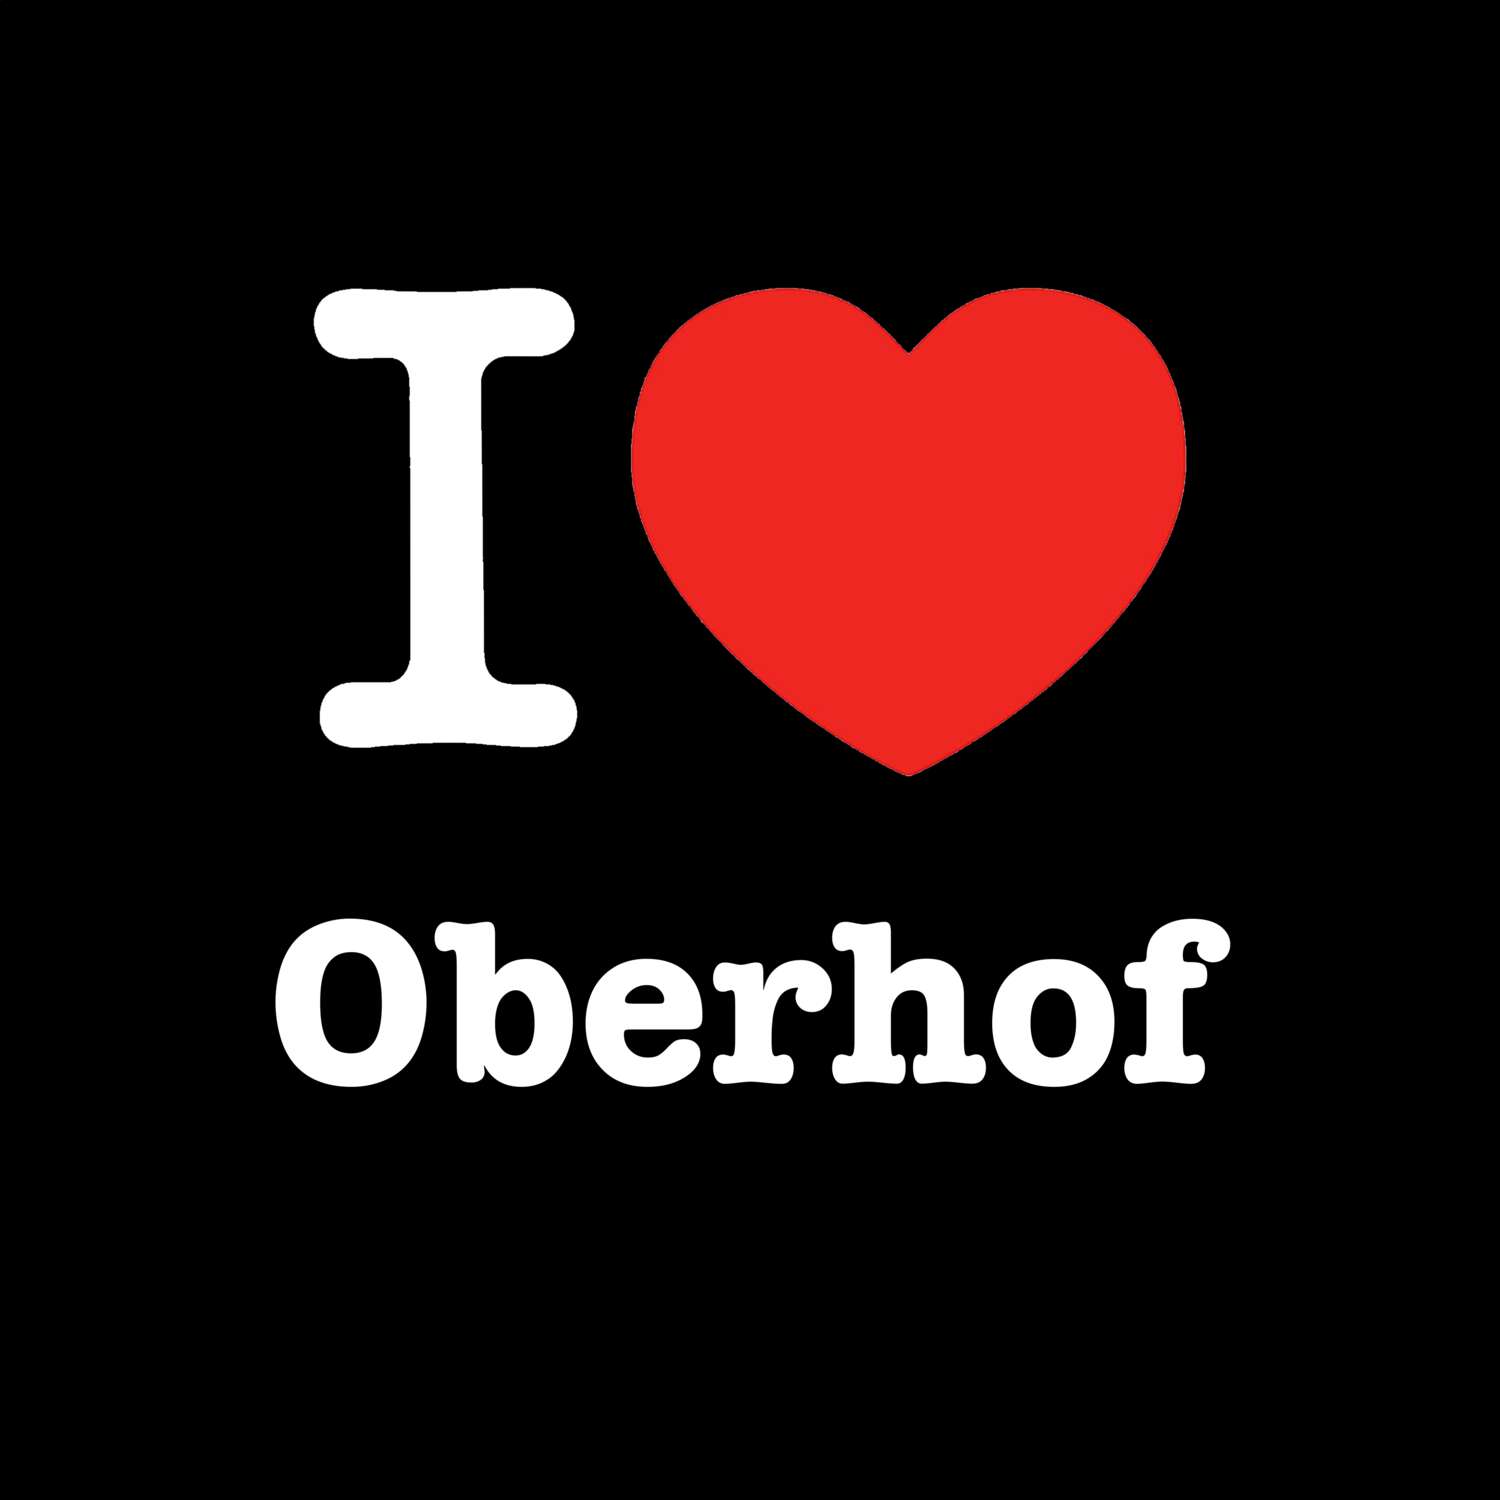 Oberhof T-Shirt »I love«